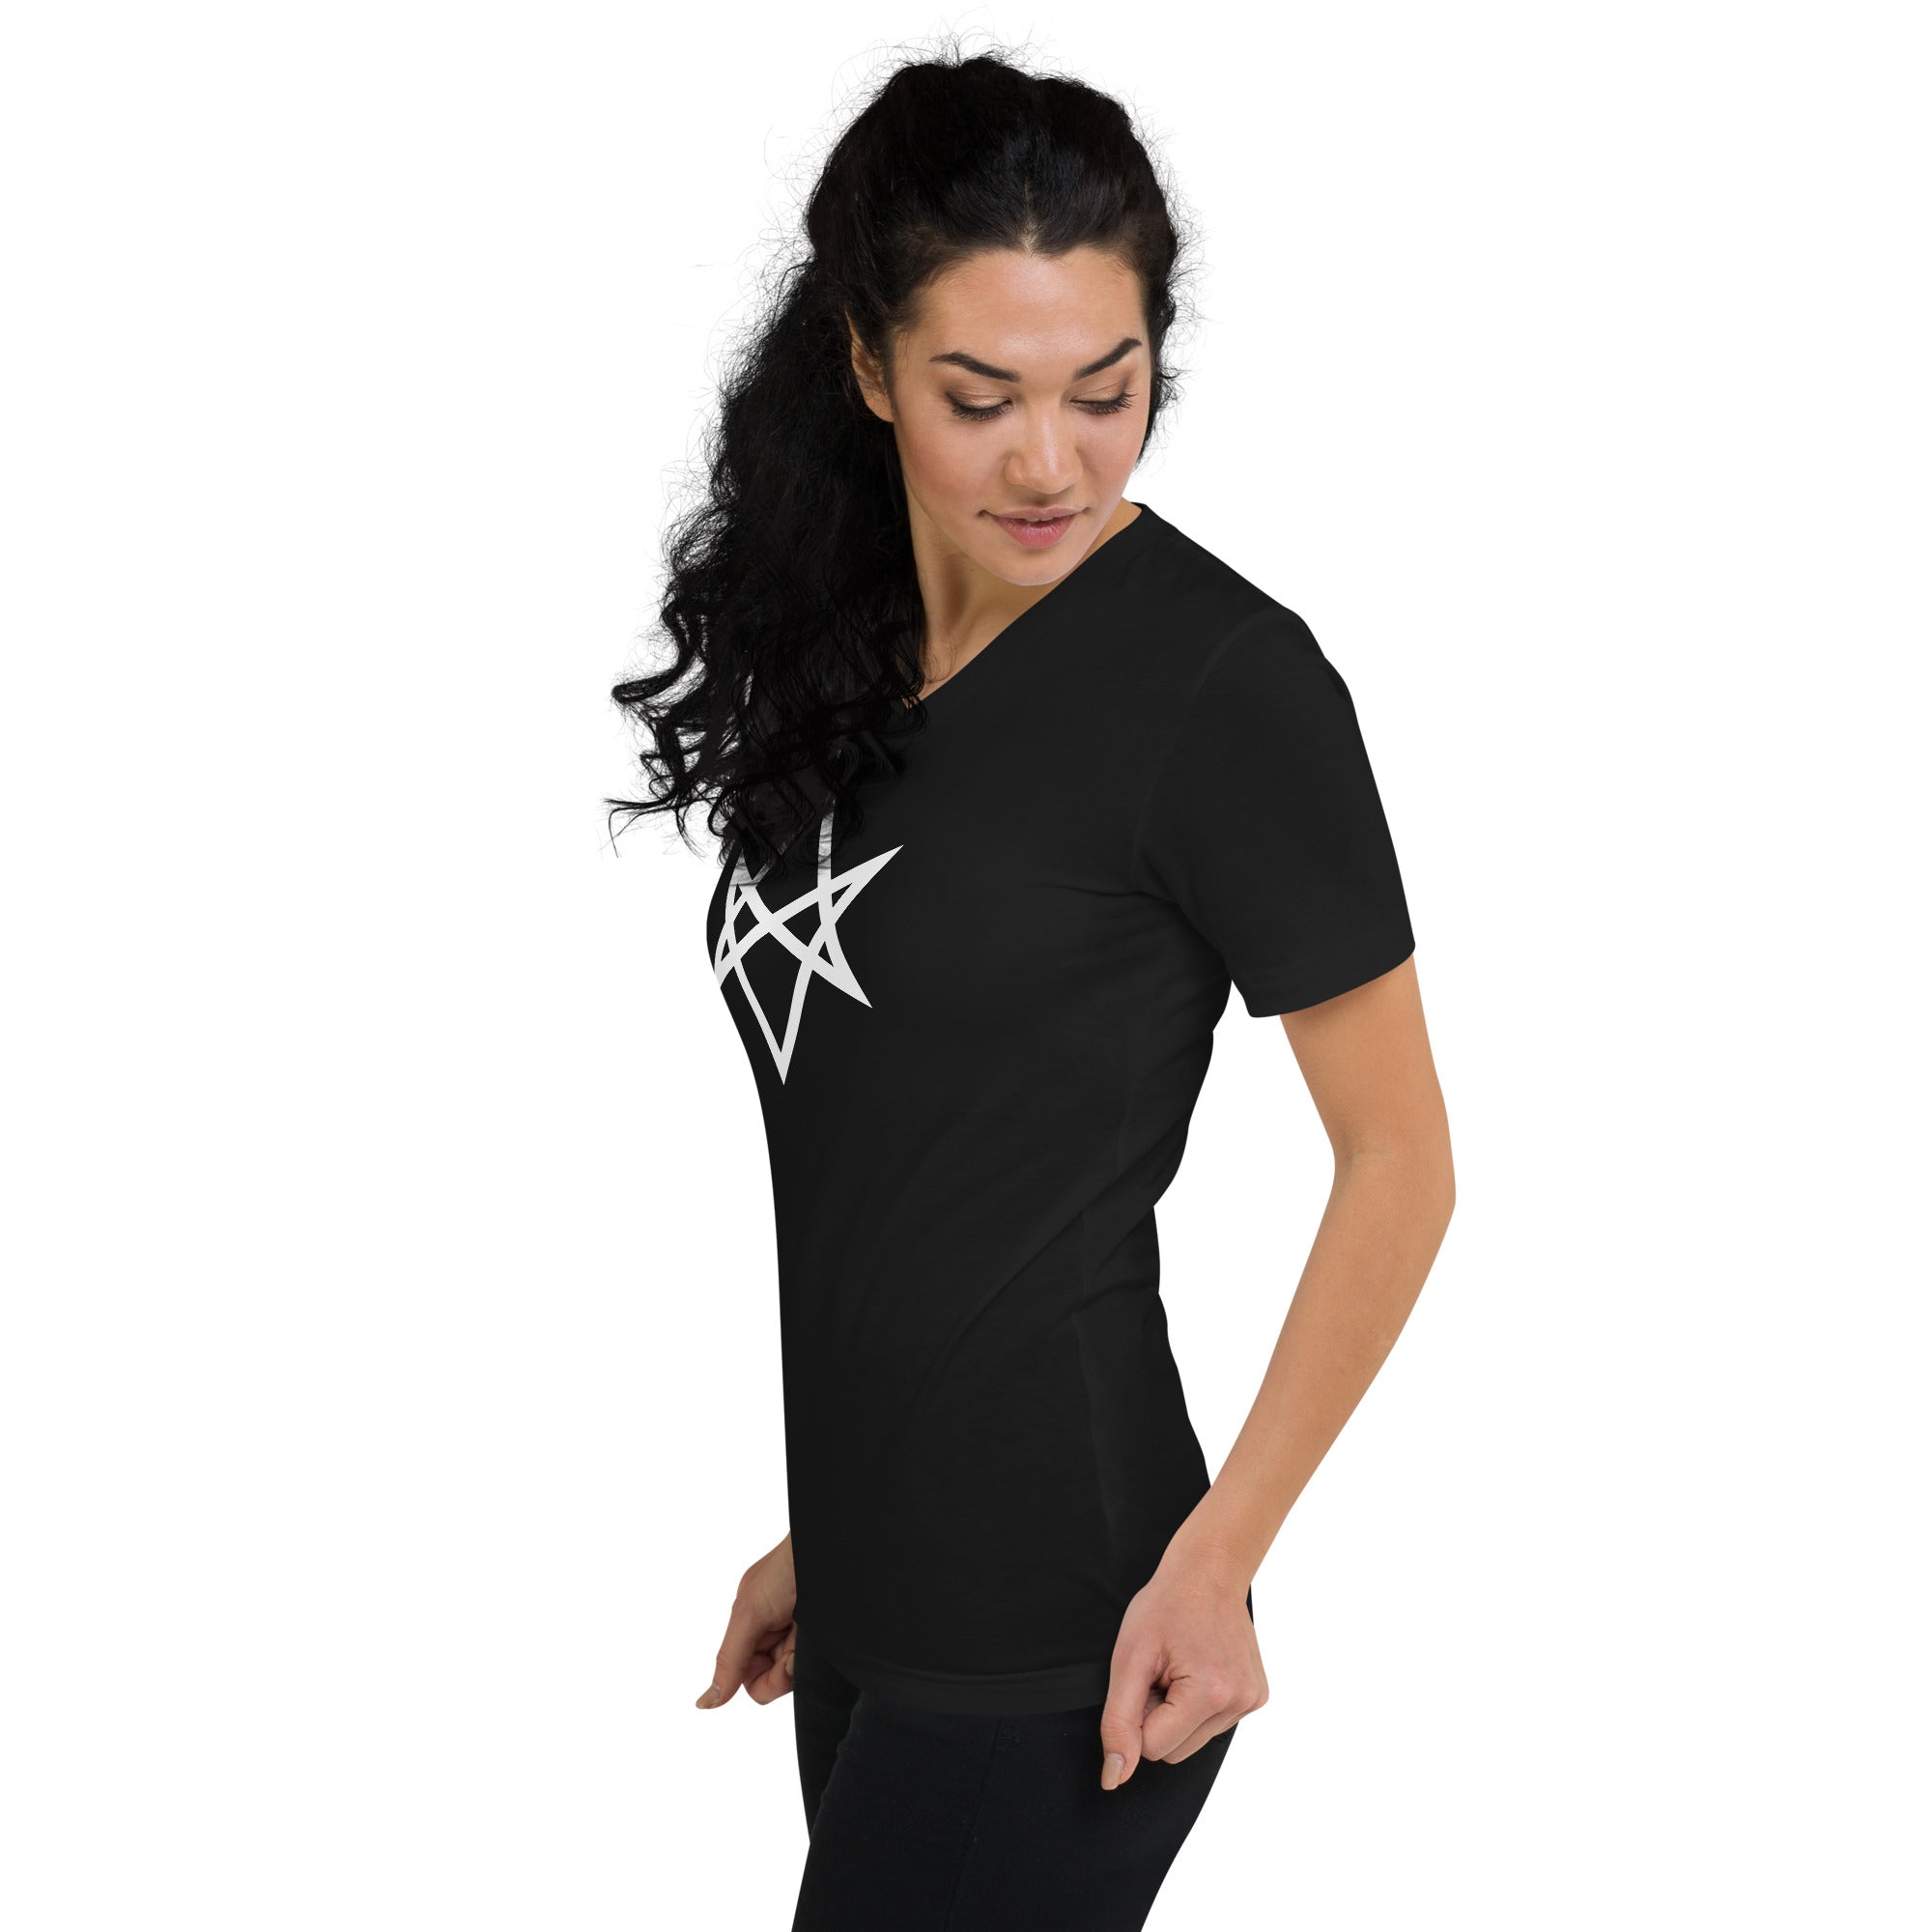 White Unicursal Hexagram Six Pointed Star Women’s Short Sleeve V-Neck T-Shirt